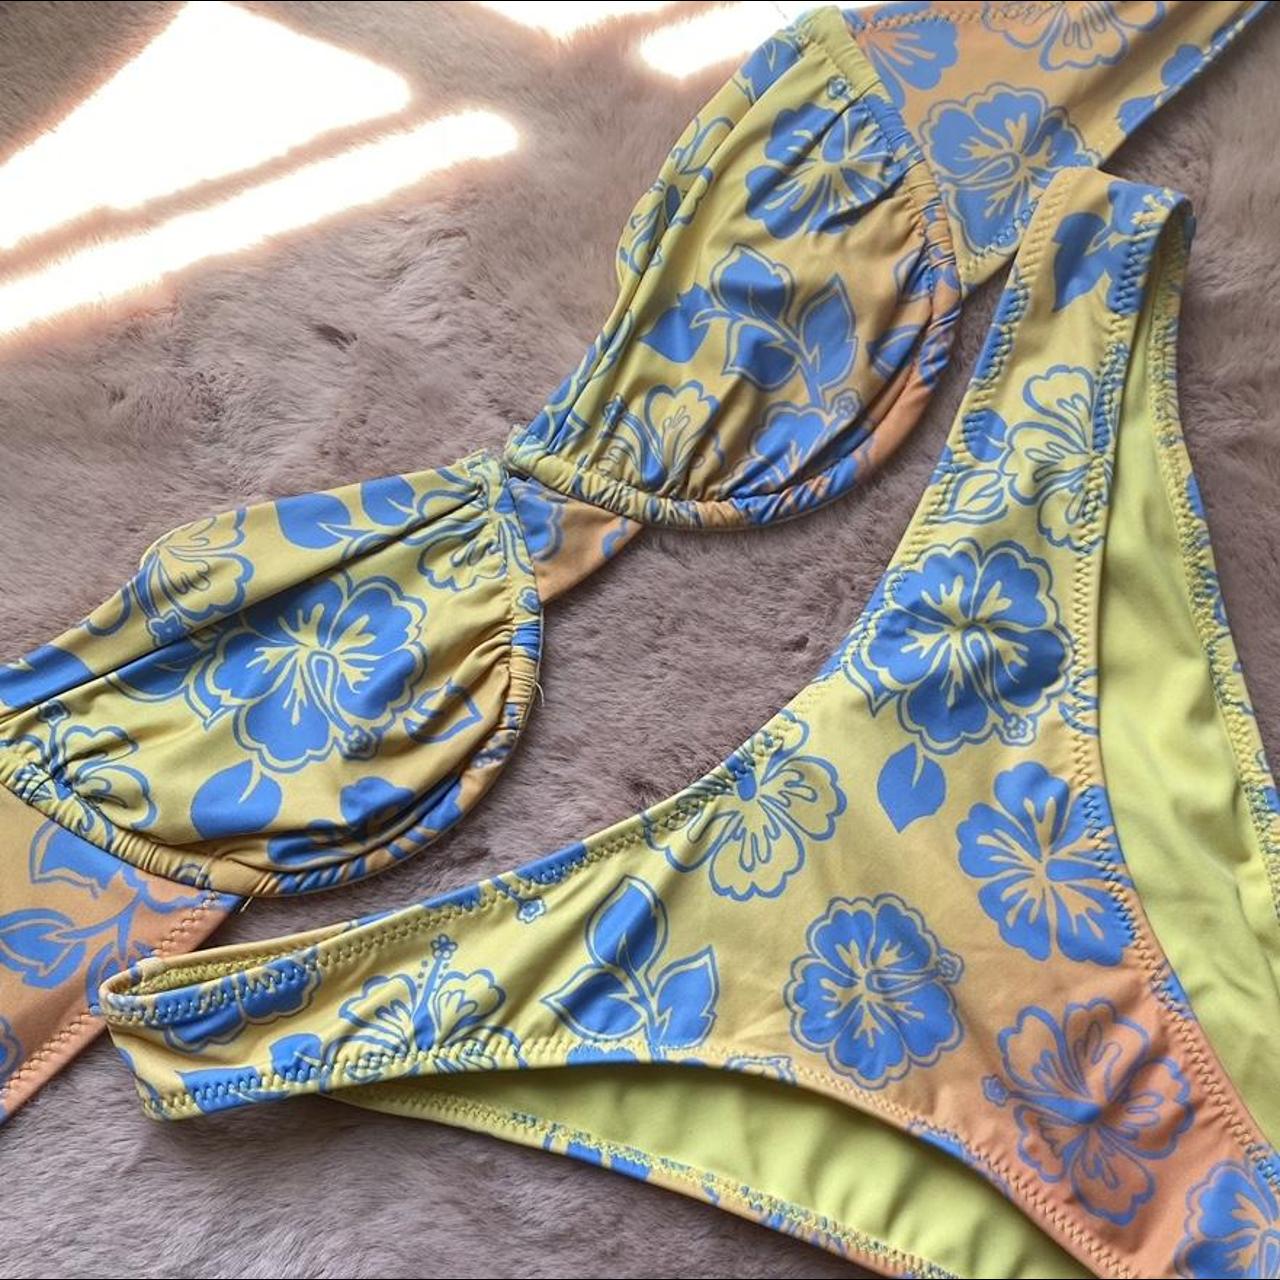 PacSun Women's Blue and Yellow Bikinis-and-tankini-sets (3)